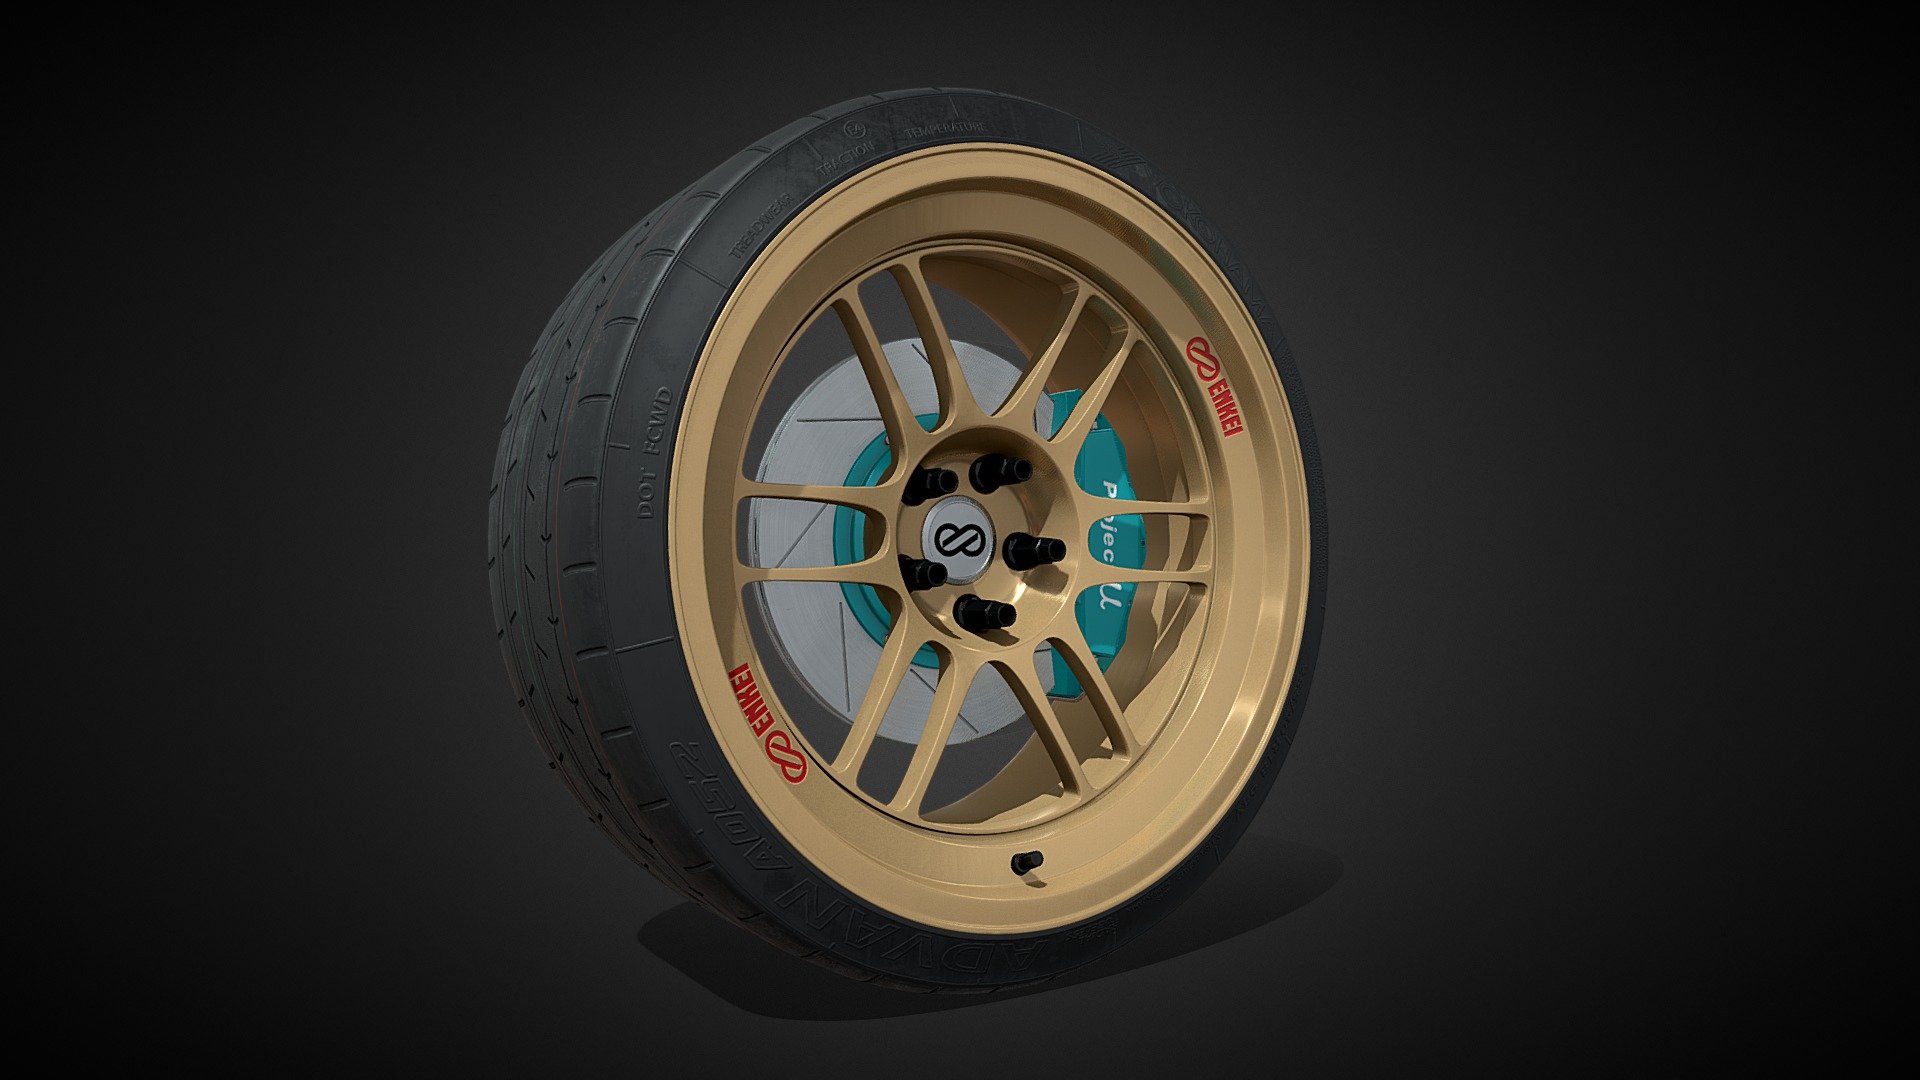 Optimize Wheel model (PBR metalness)




Tire - ADVAN®-A052

Rim - ENKEI®-RPF1RS

Brakes - Project Mu

Texture sizes:




Tire - 4k textures

Rim - 4k textures

Rotor - 2k textures

Caliper - 2k textures
 - ADVAN®-A052 • ENKEI®-RPF1RS • Project Mu - Buy Royalty Free 3D model by Yurii Chumak (@Yurii_Chumak) 3d model